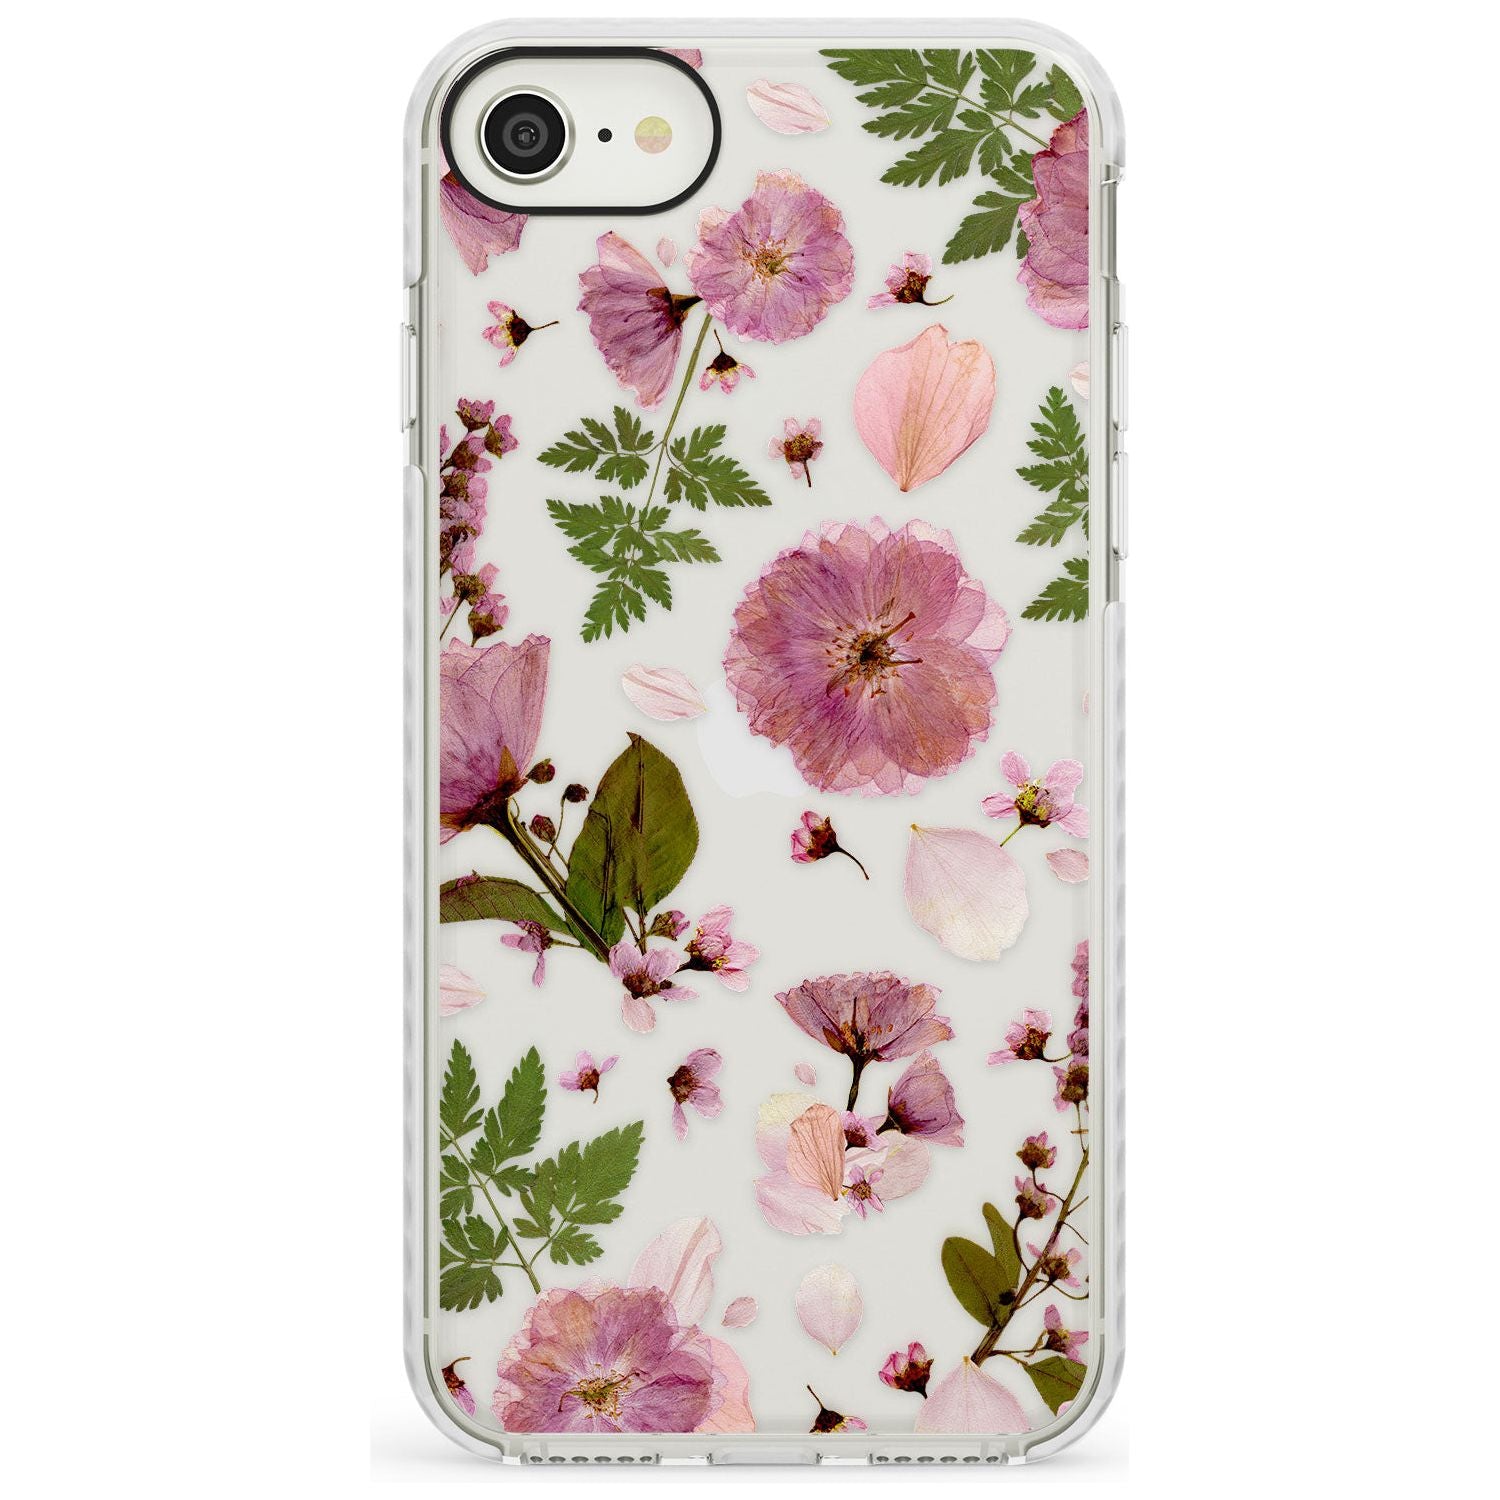 Natural Arrangement of Flowers & Leaves Design Impact Phone Case for iPhone SE 8 7 Plus